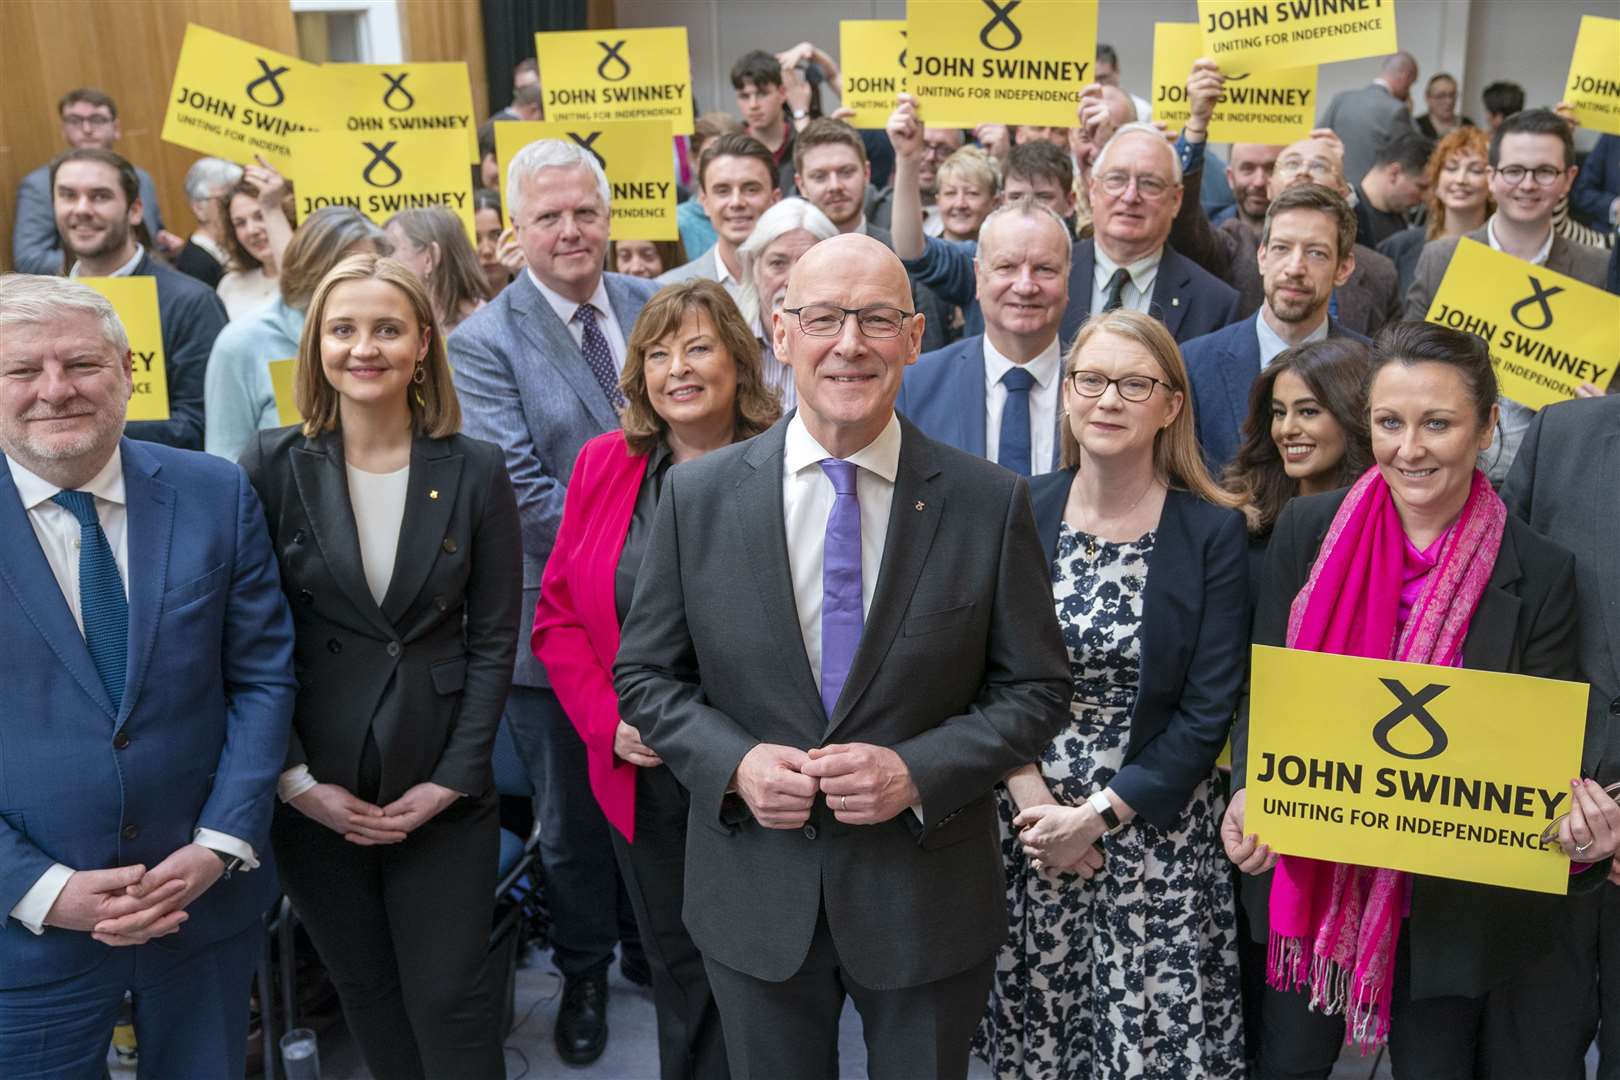 John Swinney became Scotland’s First Minister last week (Jane Barlow/PA)